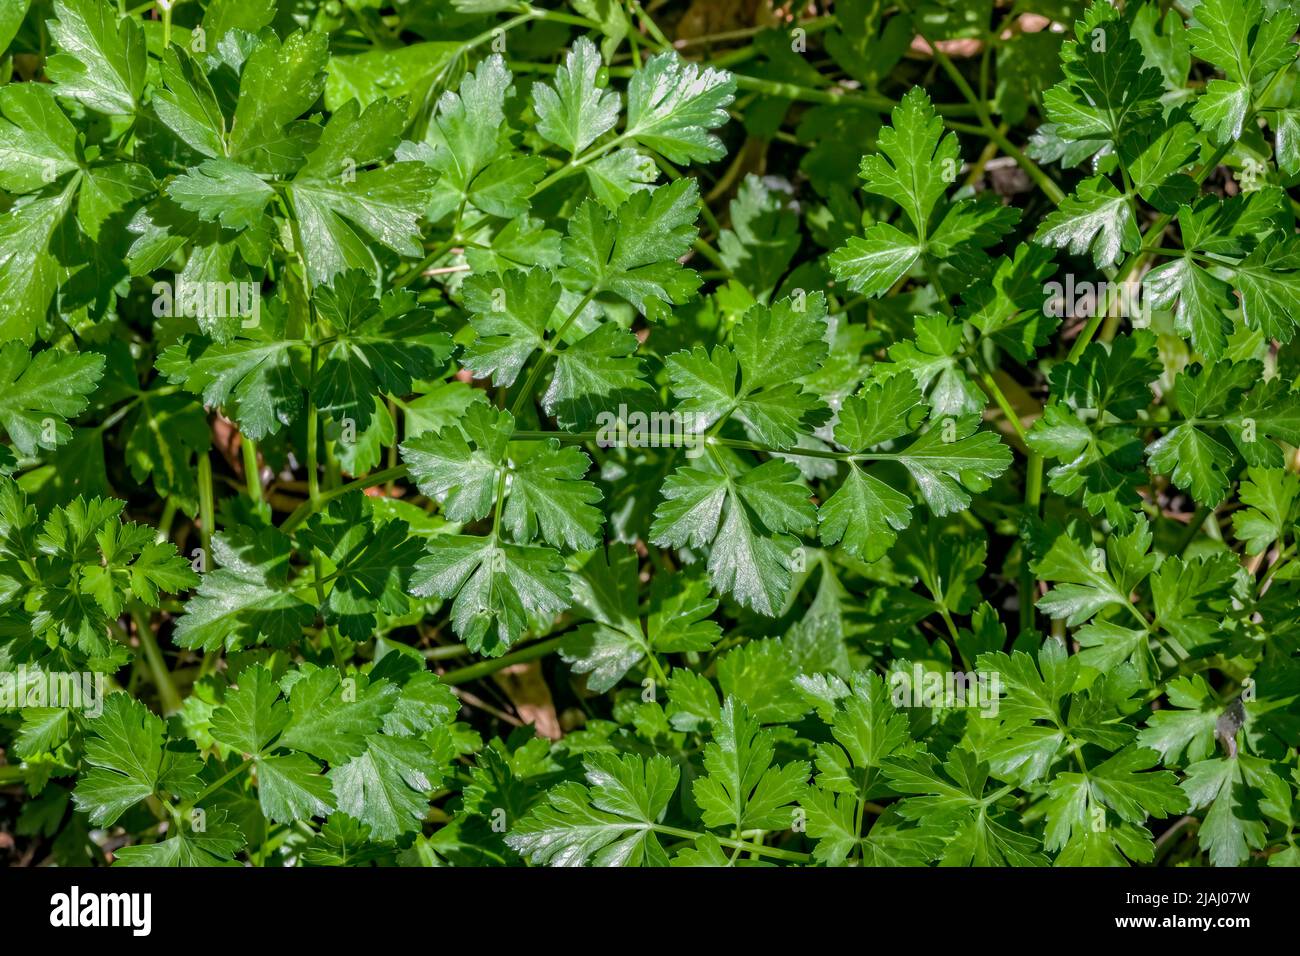 Parsley or garden parsley (Petroselinum crispum) Stock Photo